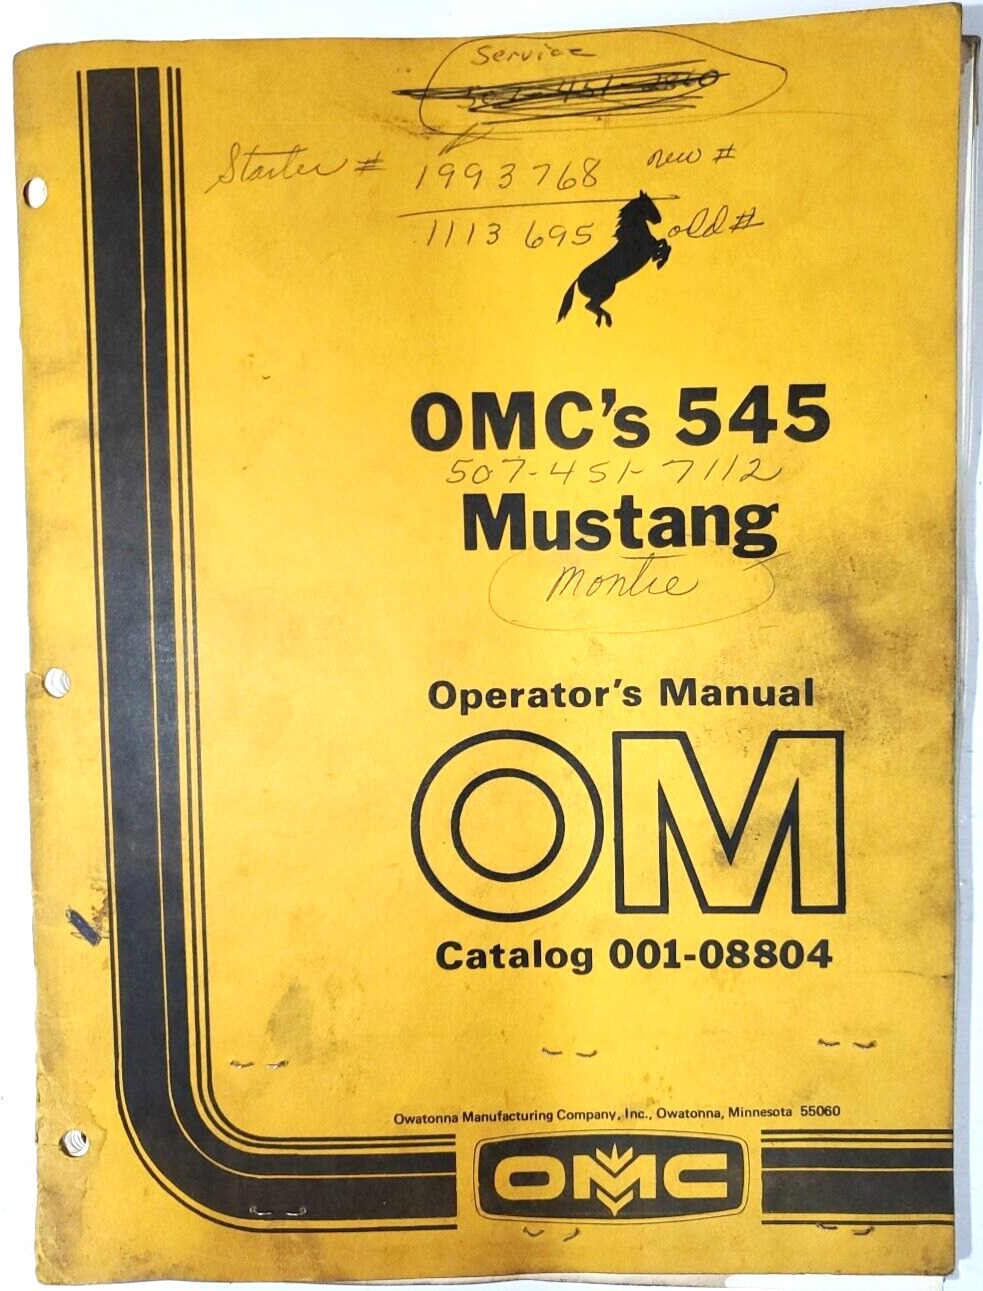 OMC's 545 Mustang Skid Loader Vintage Operator's Manual